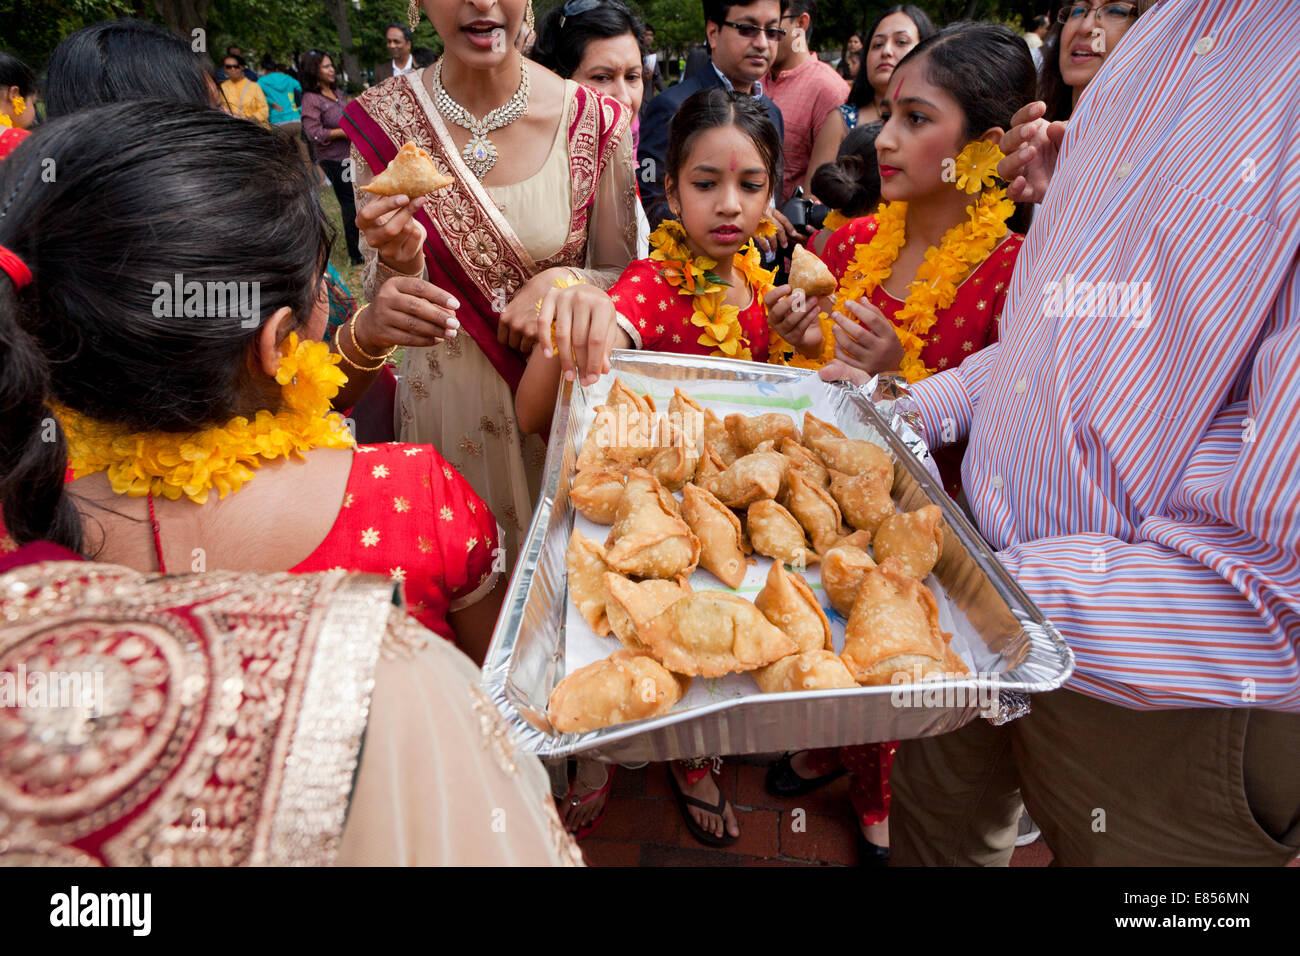 Crowd gathered around a plate of Indian Samosas Stock Photo